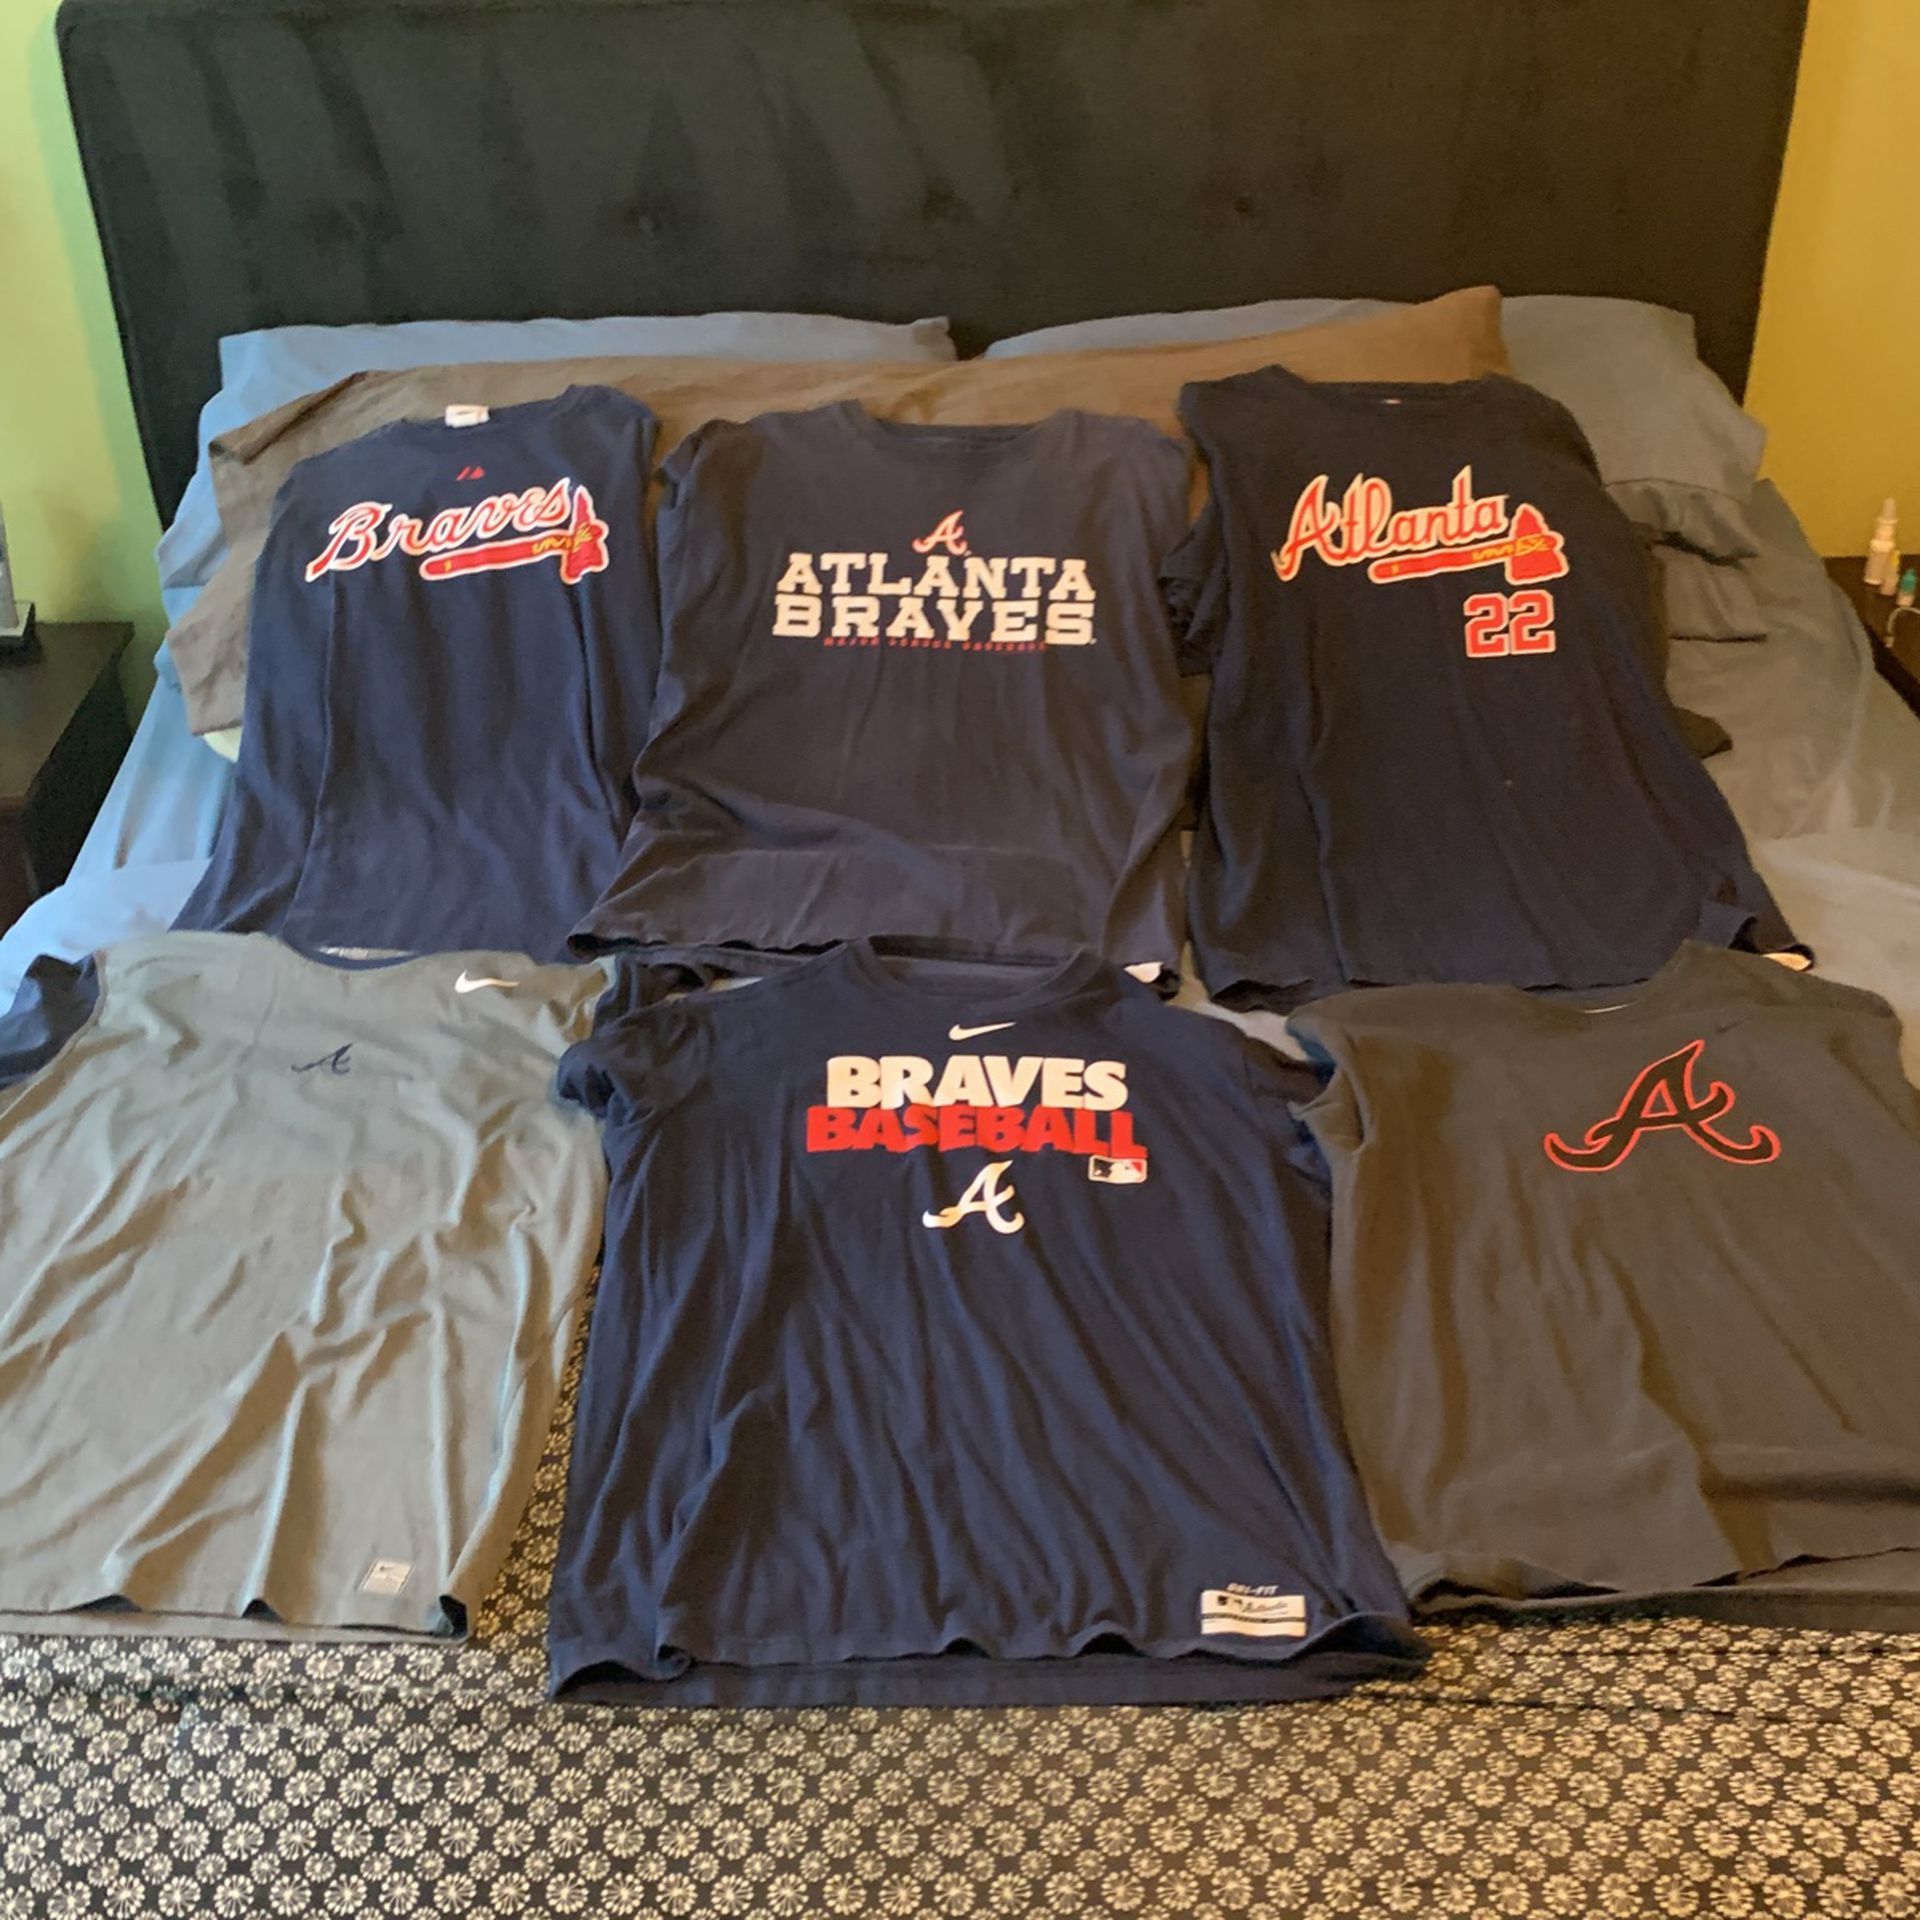 Six Atlanta Braves T-shirts.